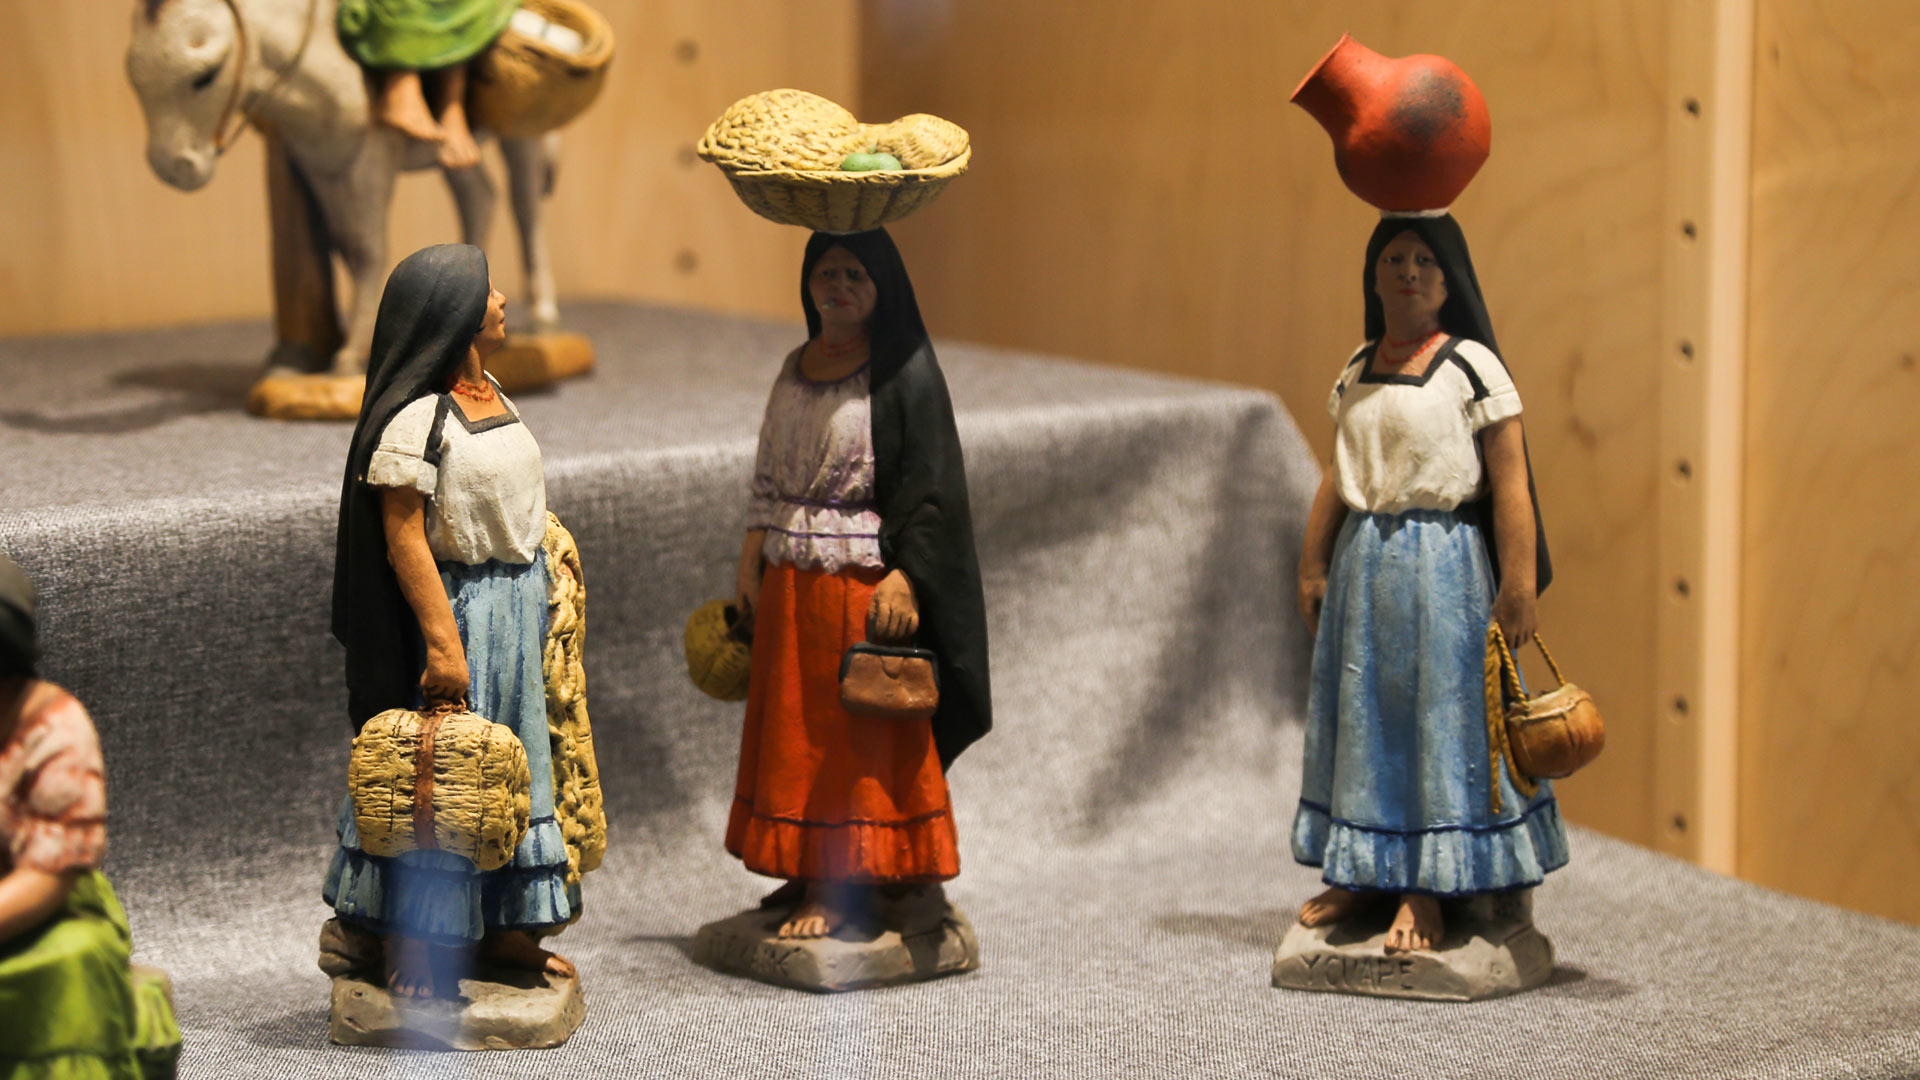 A figurine of a woman holding a basket, a figurine of a woman with a basket on her head, and a figurine of a woman with a pot on her head